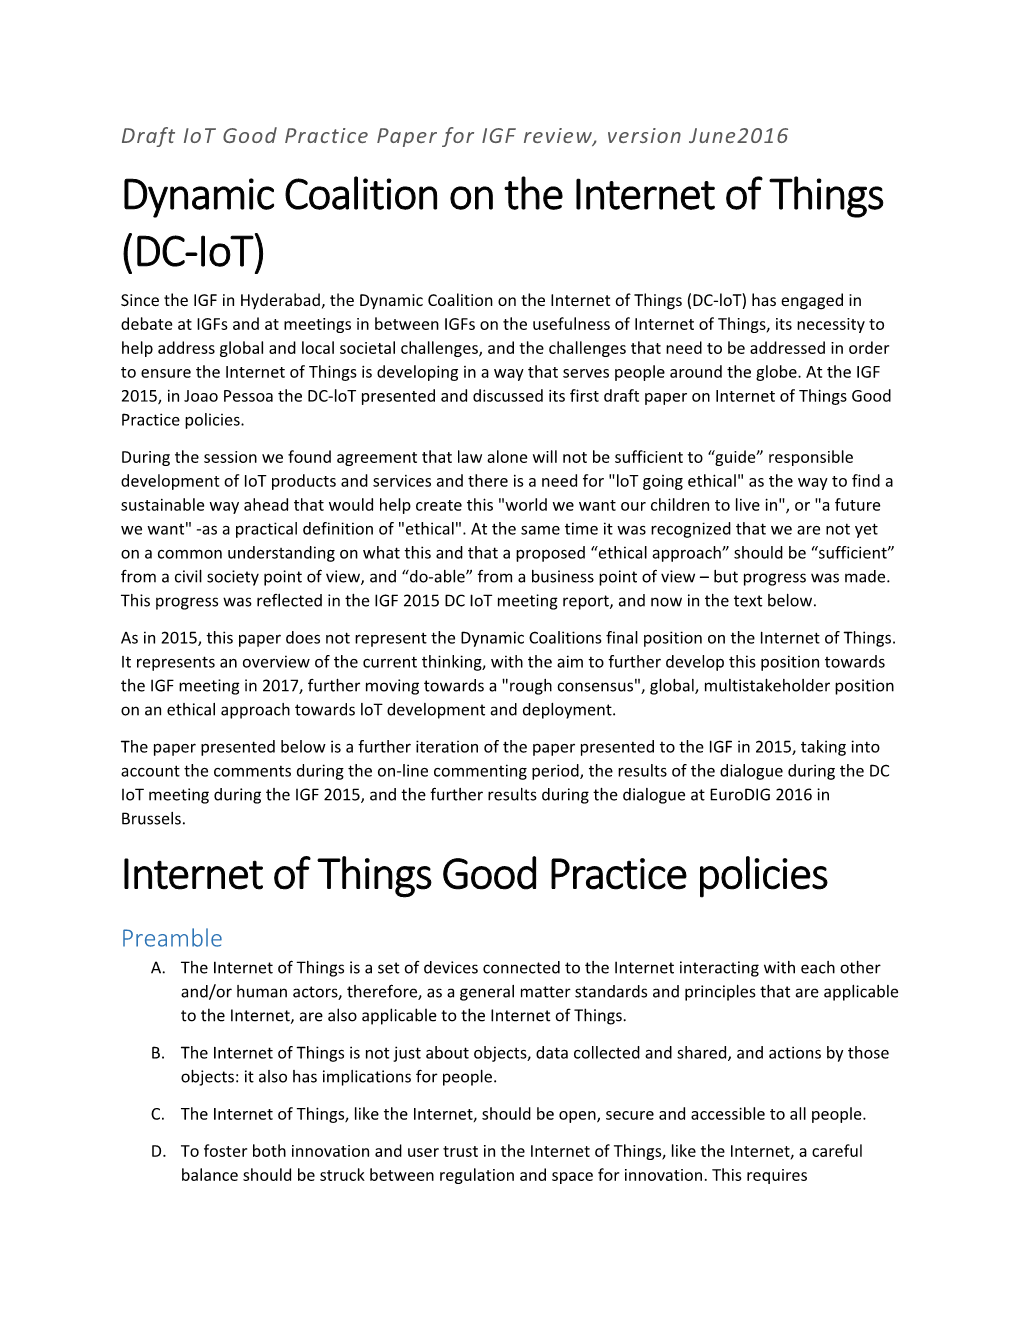 Draft Iot Good Practice Paper for IGF Review, Version June2016